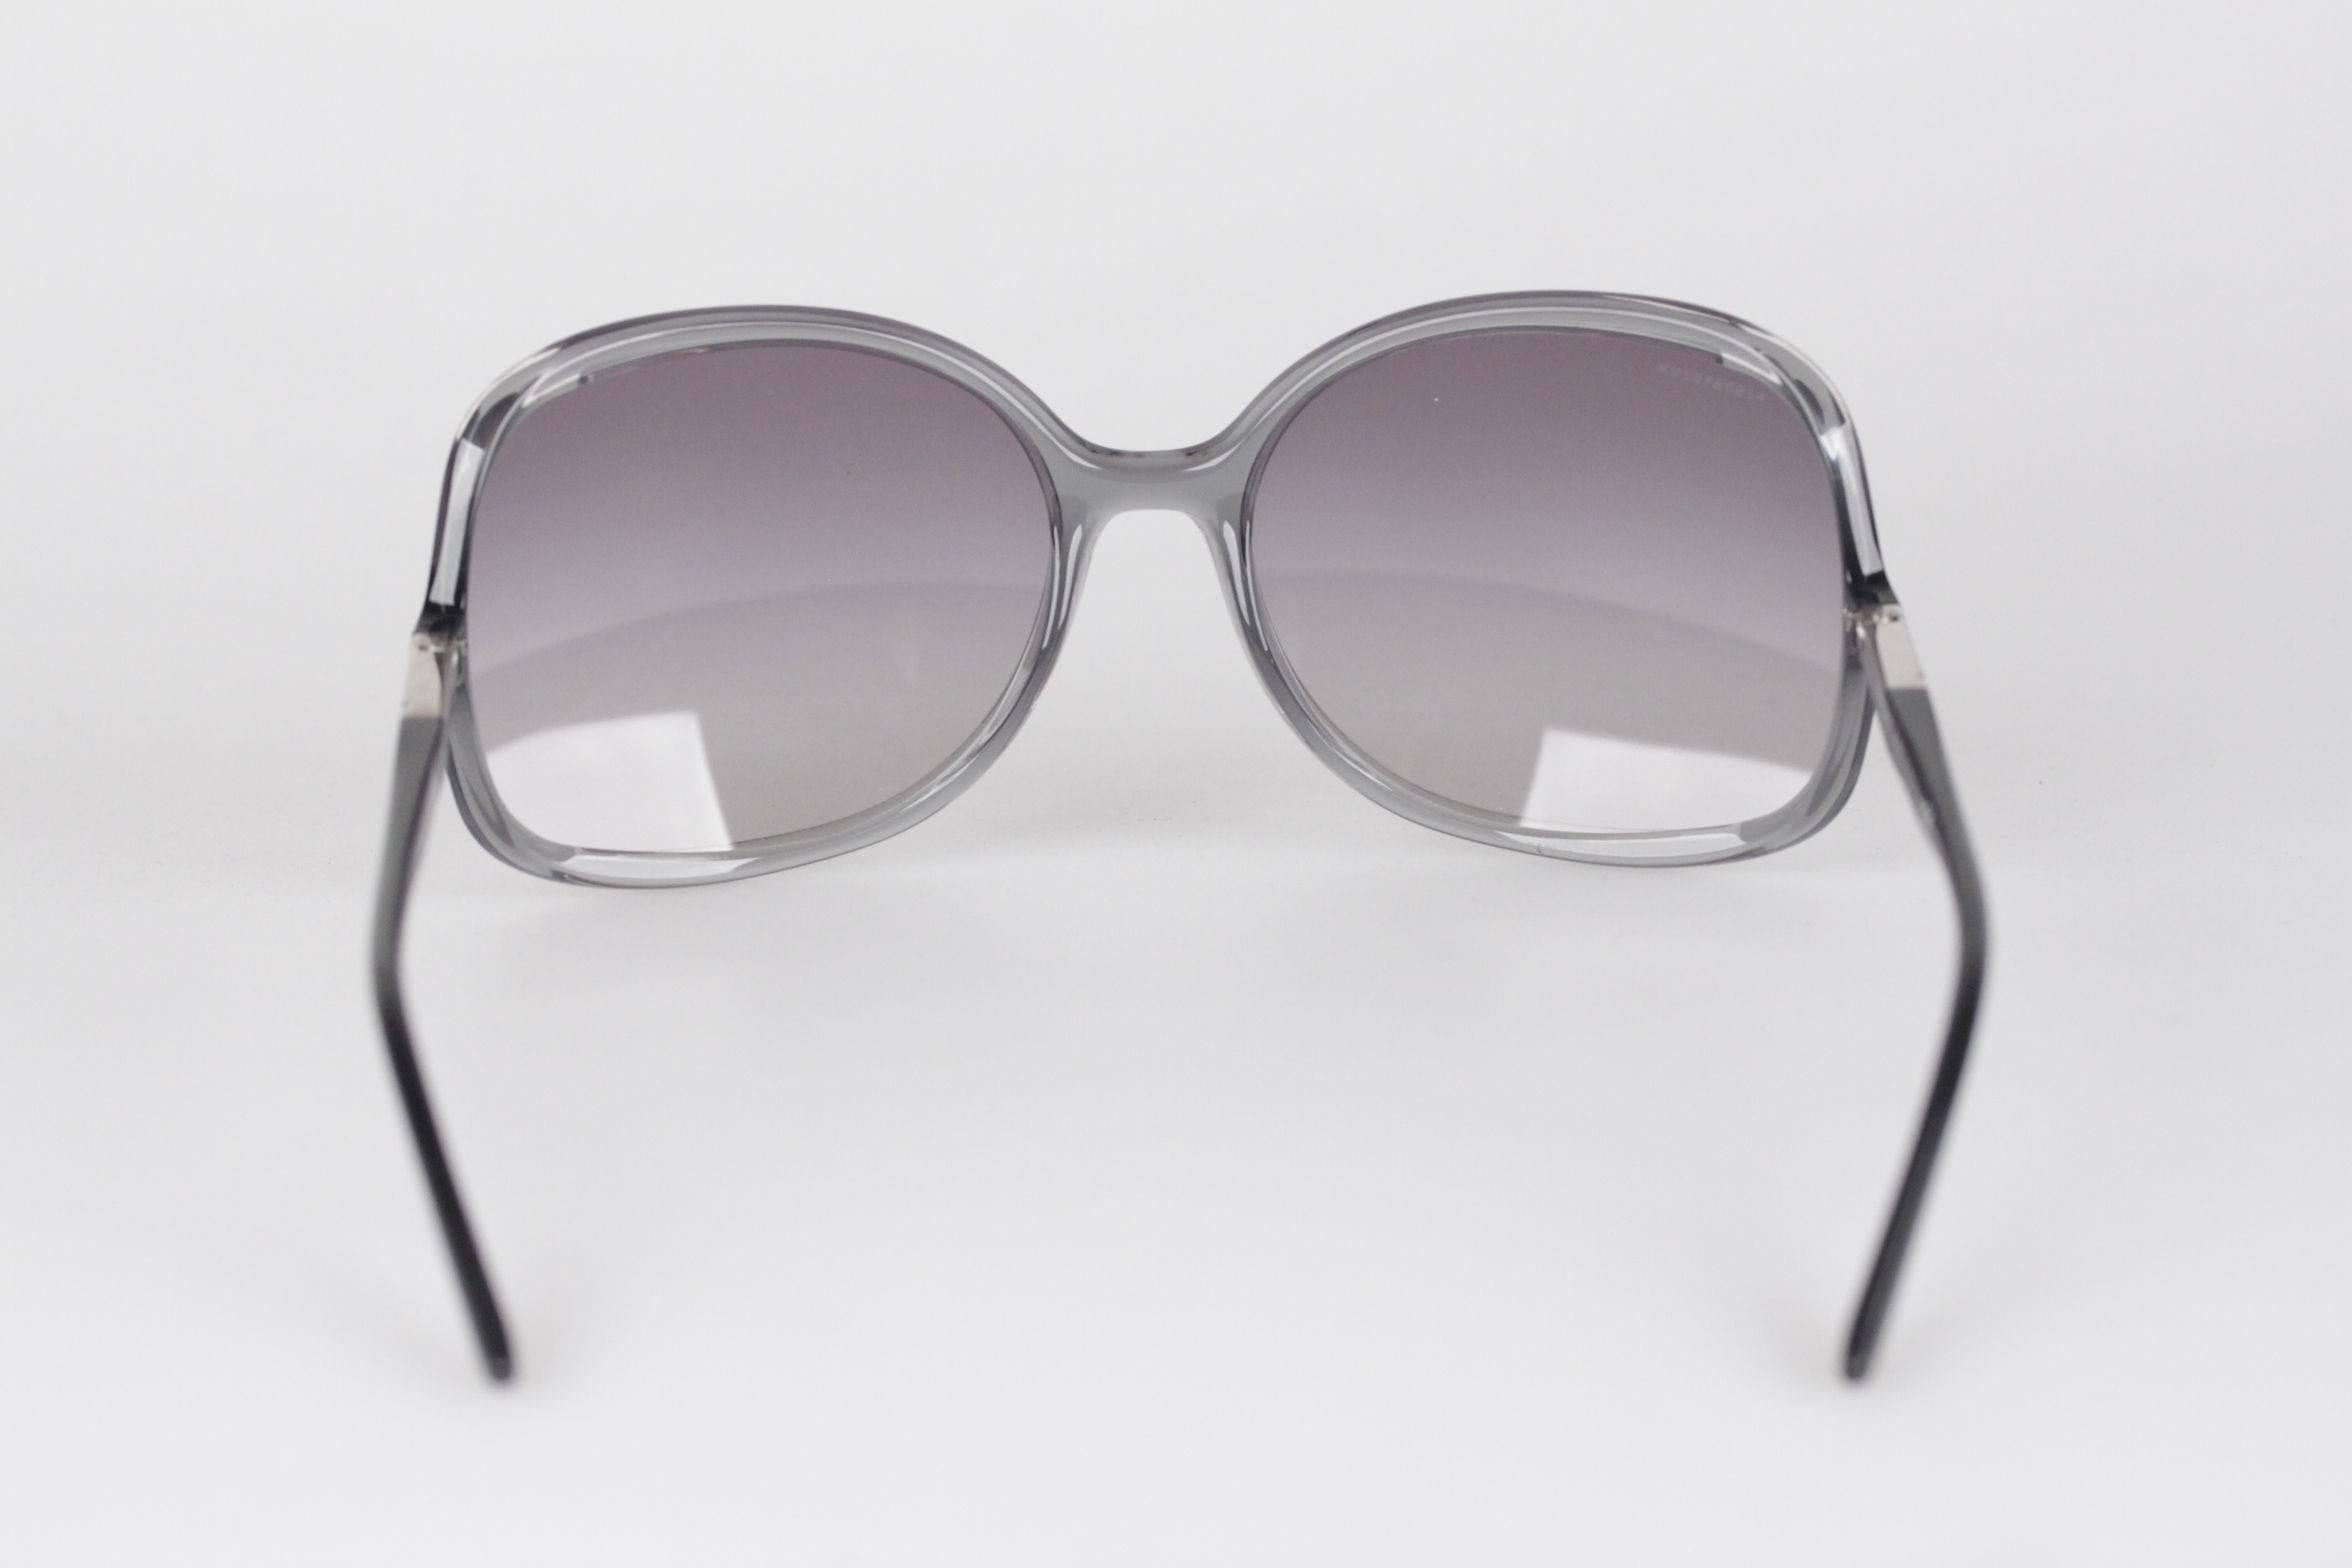 Women's VERSACE Mint Sunglasses mod 4174 236/11 61/19 125 2N gray frame w/CASE